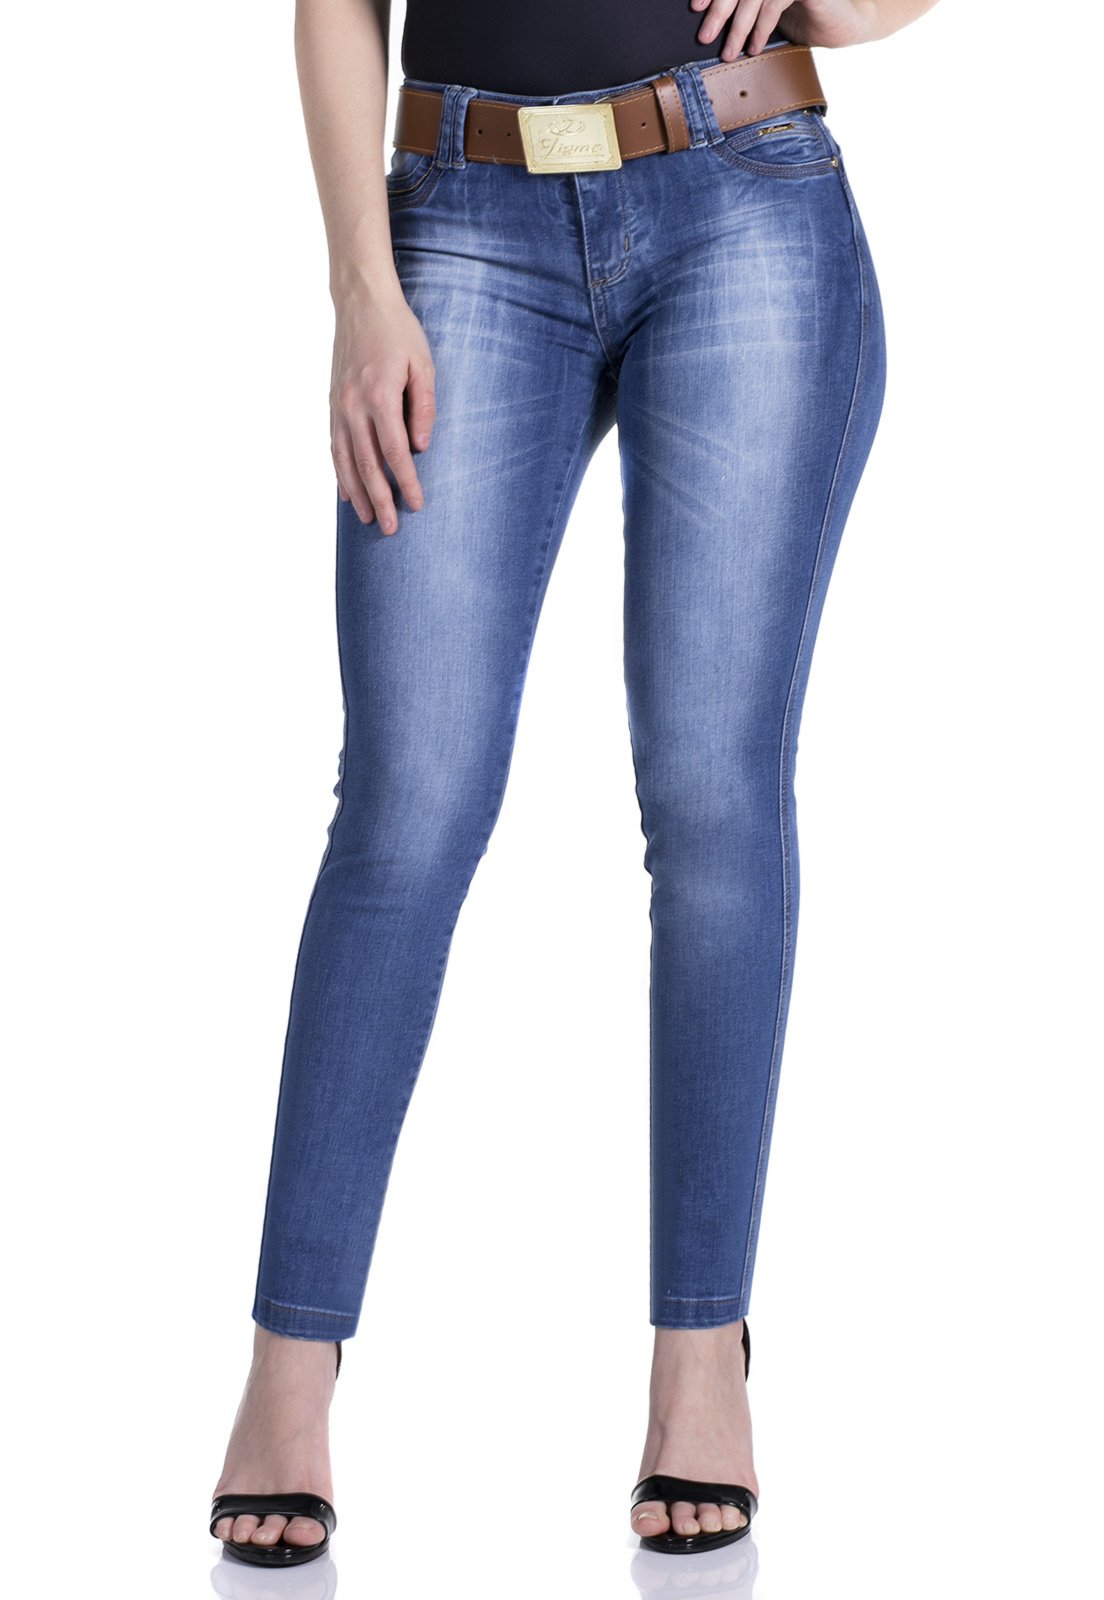 calça jeans aumenta quadril